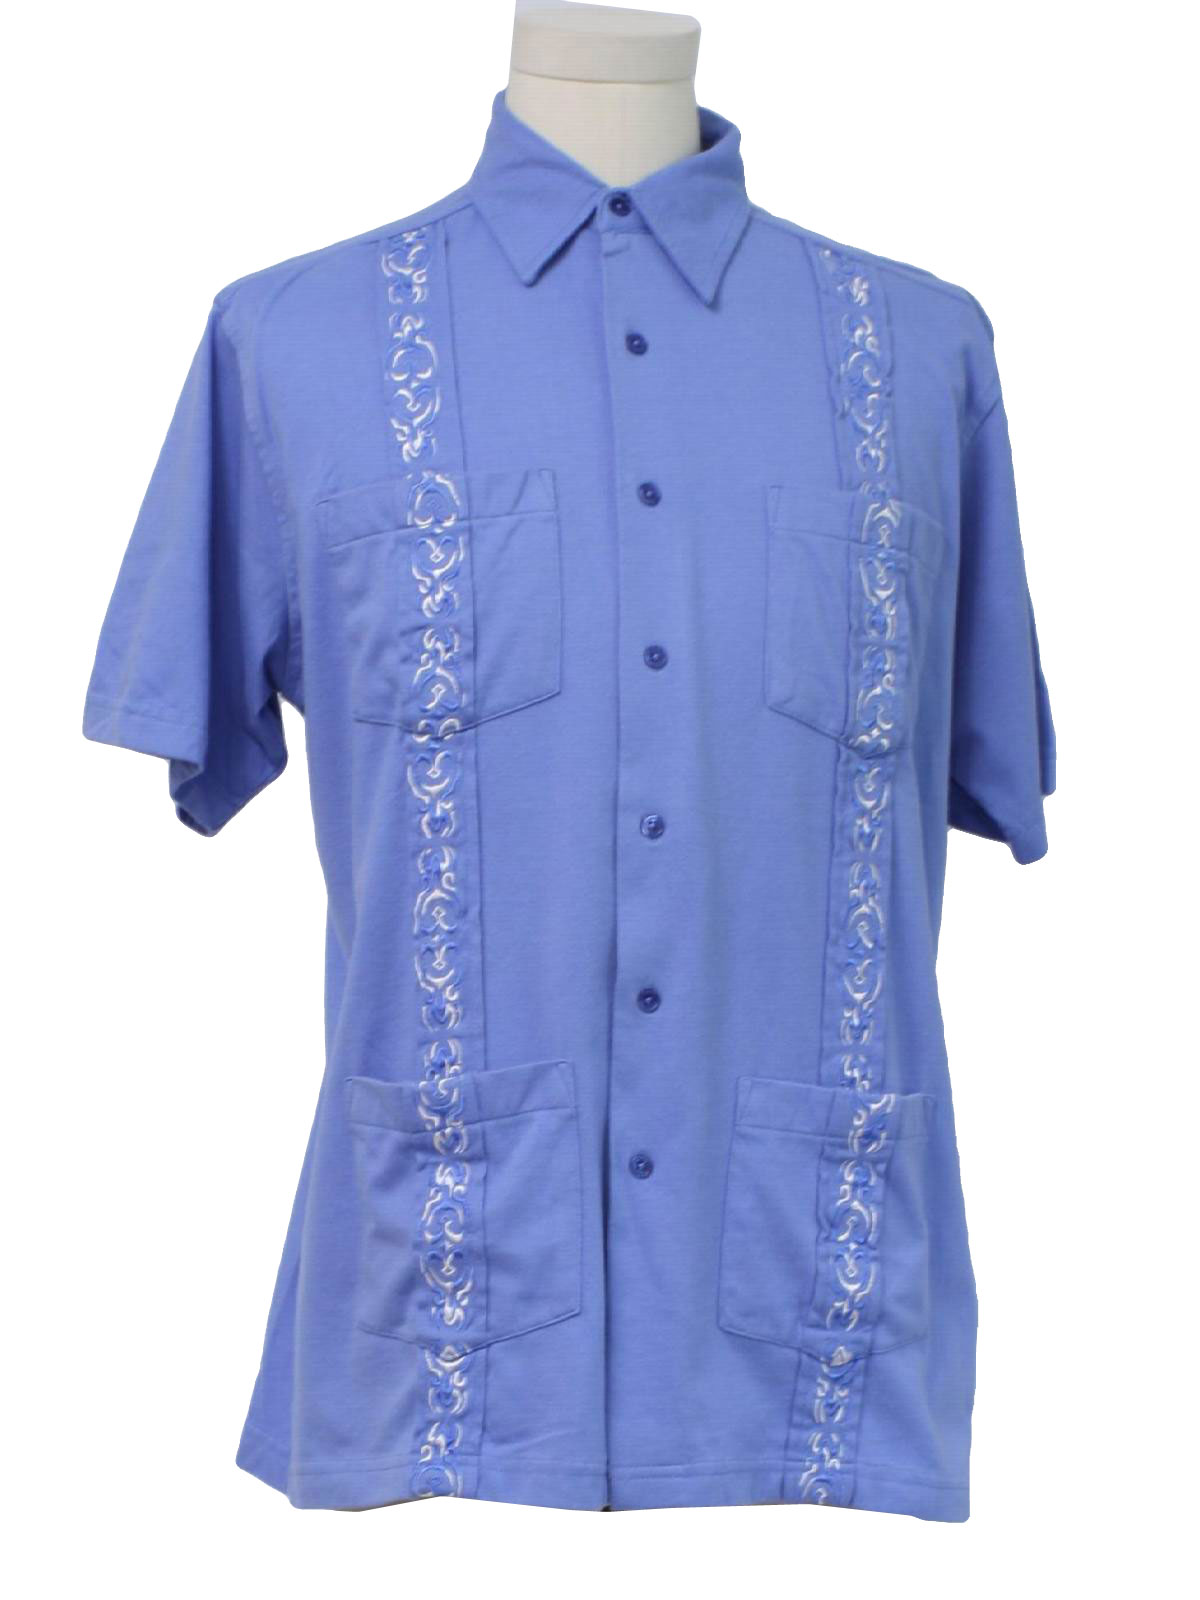 1980's Retro Guayabera Shirt: 80s -Haband- Mens periwinkle blue cotton ...